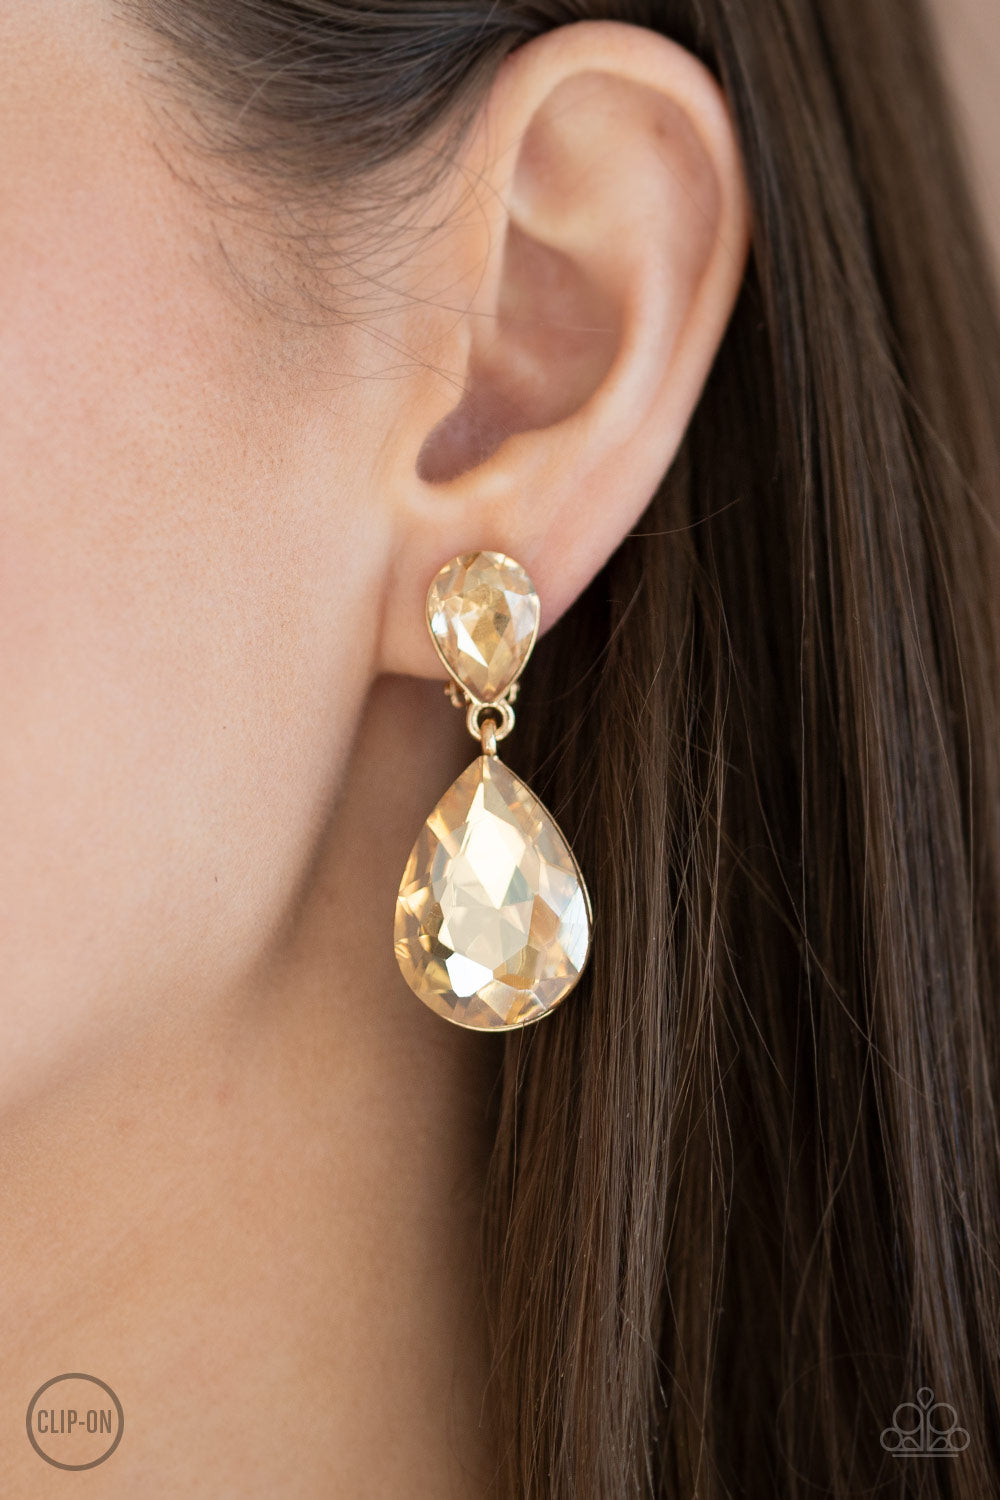 Aim For The MEGASTARS Gold
Clip Earrings - Daria's Blings N Things